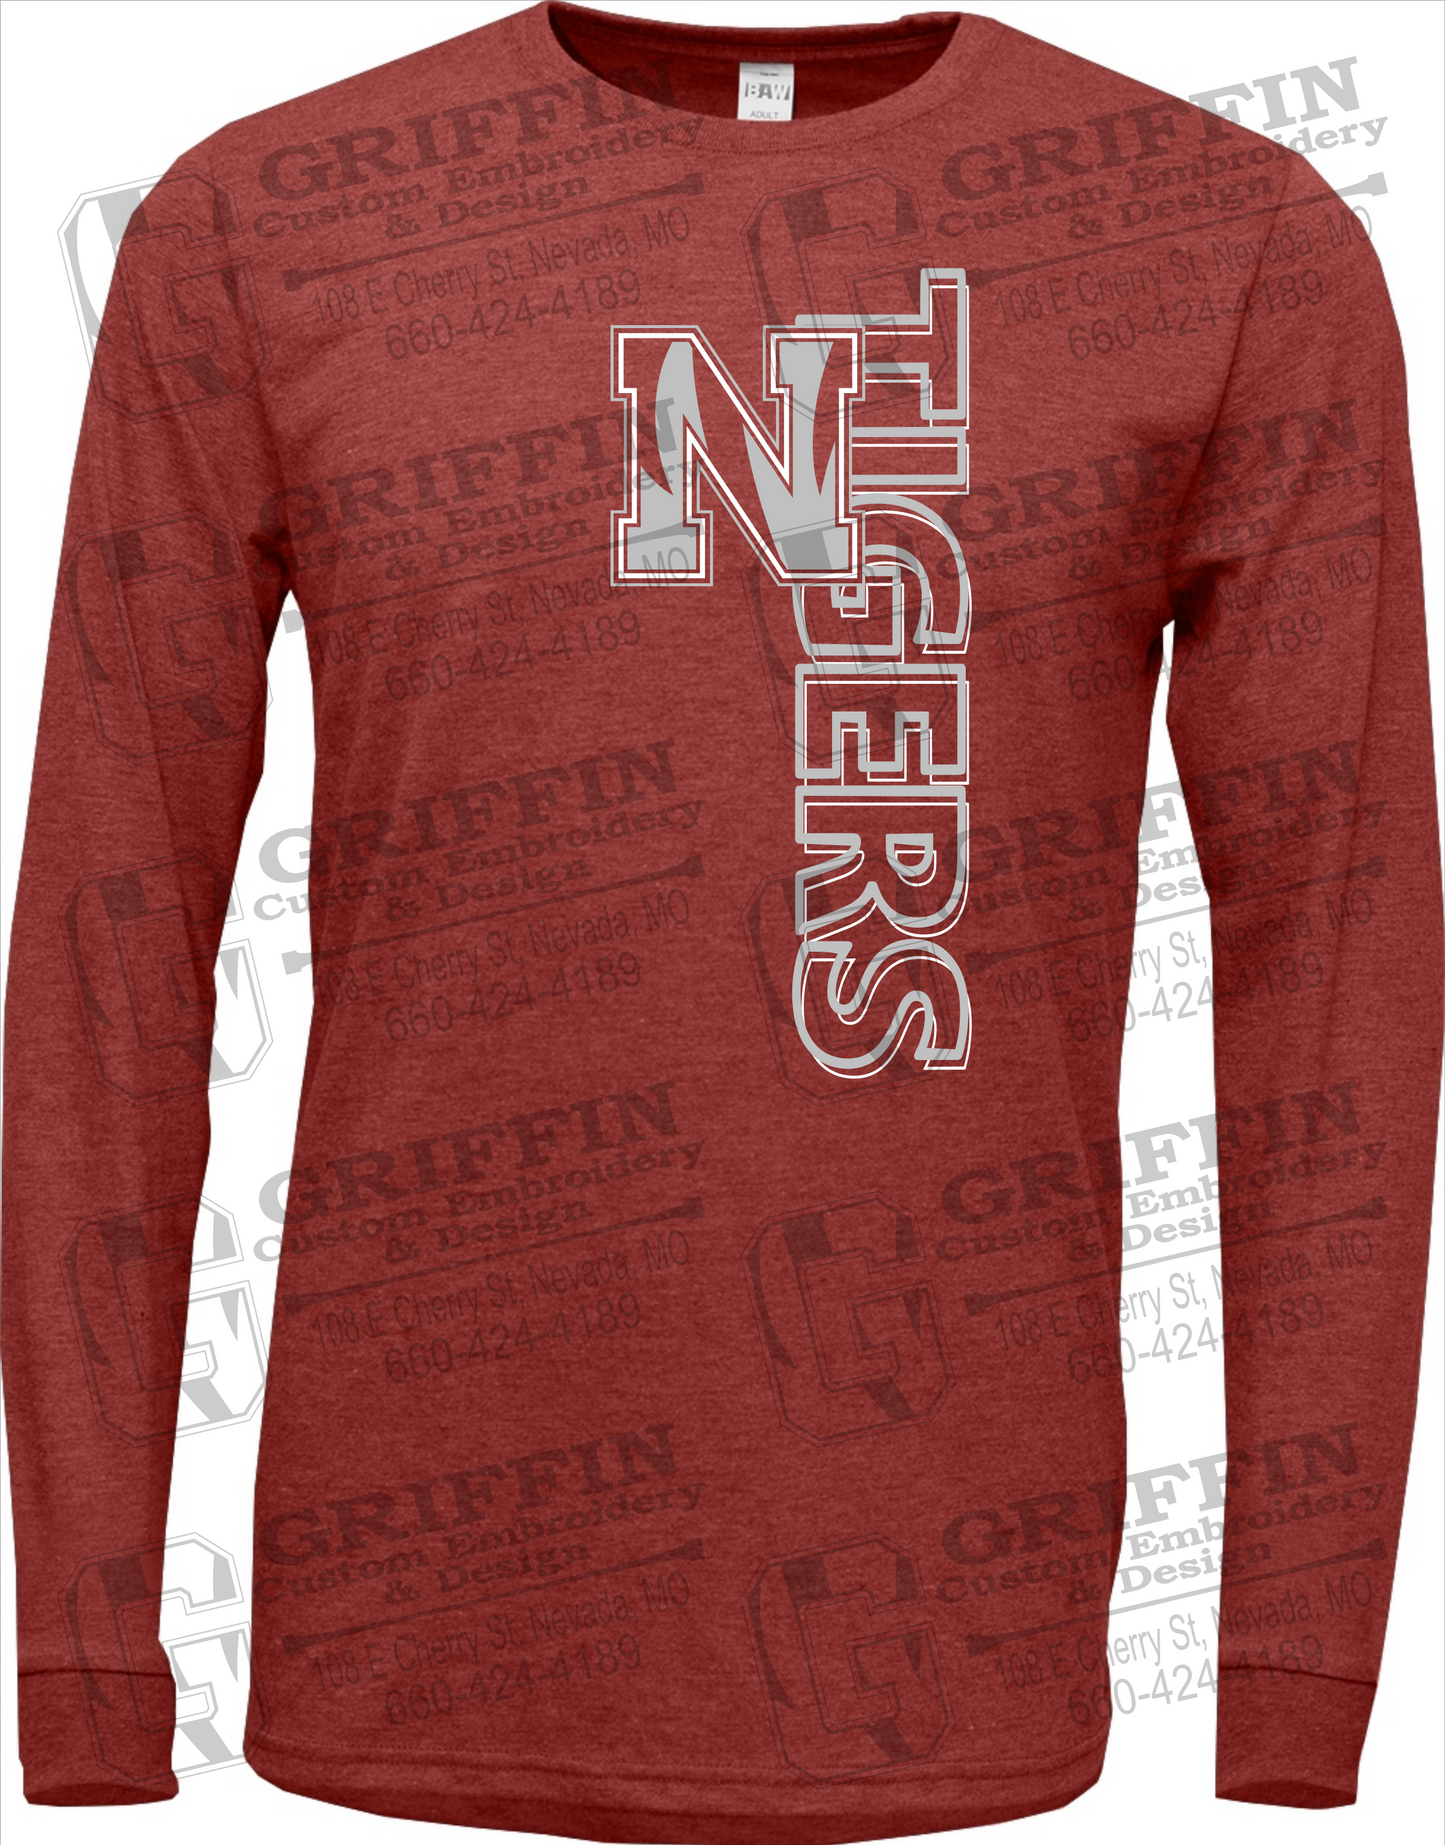 Nevada Tigers 22-F Long Sleeve T-Shirt